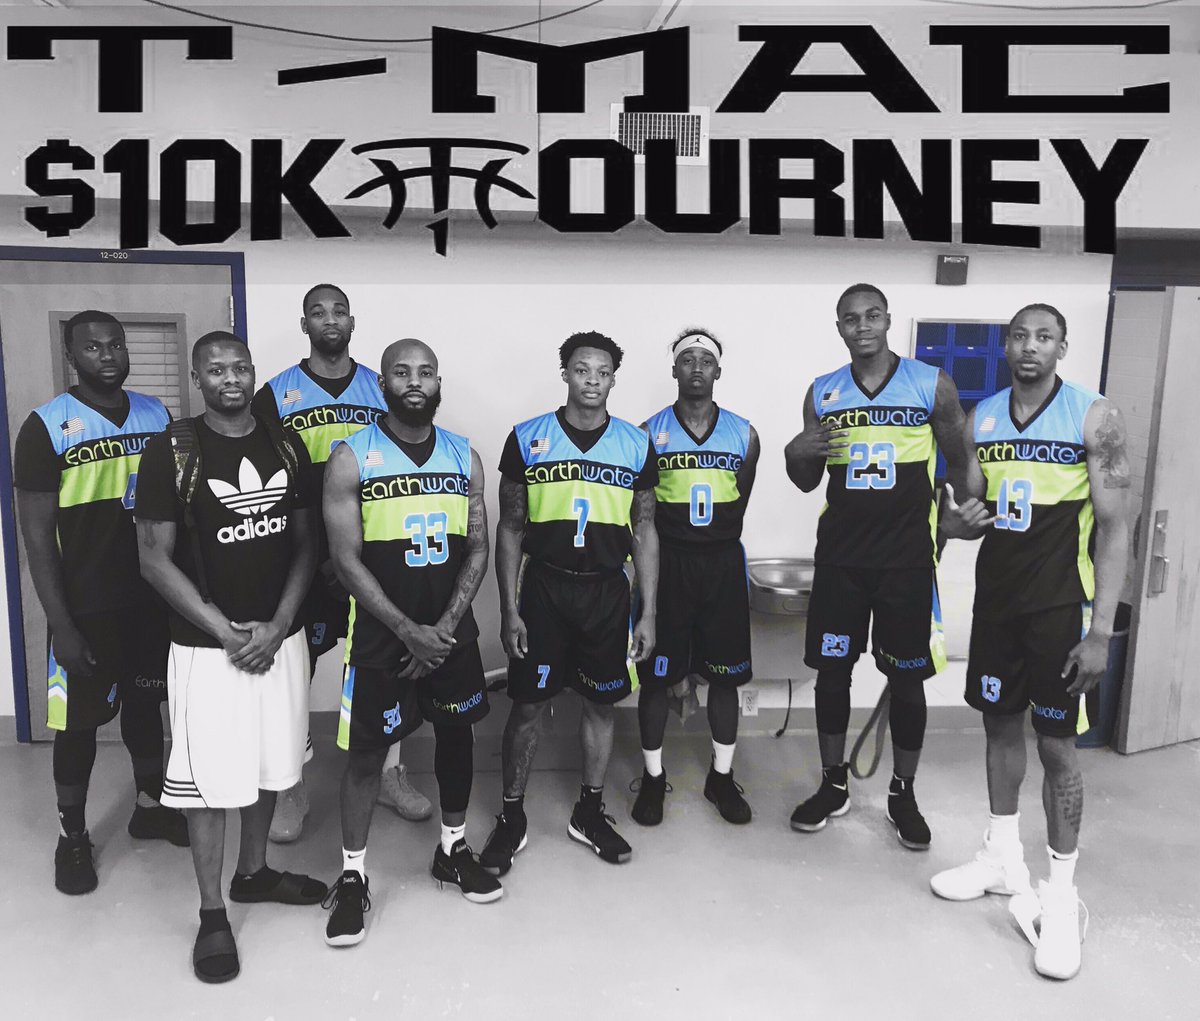 #ThrowbackThursday TEAM @YenEuroMrktgINC 🌎🌍 2018 #TMAC10k 💰 🏀Tournament #TeamYenEuro #YenEuroMarketing #YenEuroMarketingINC #Basketball #Tournament #PolkCounty #Auburndale #Florida